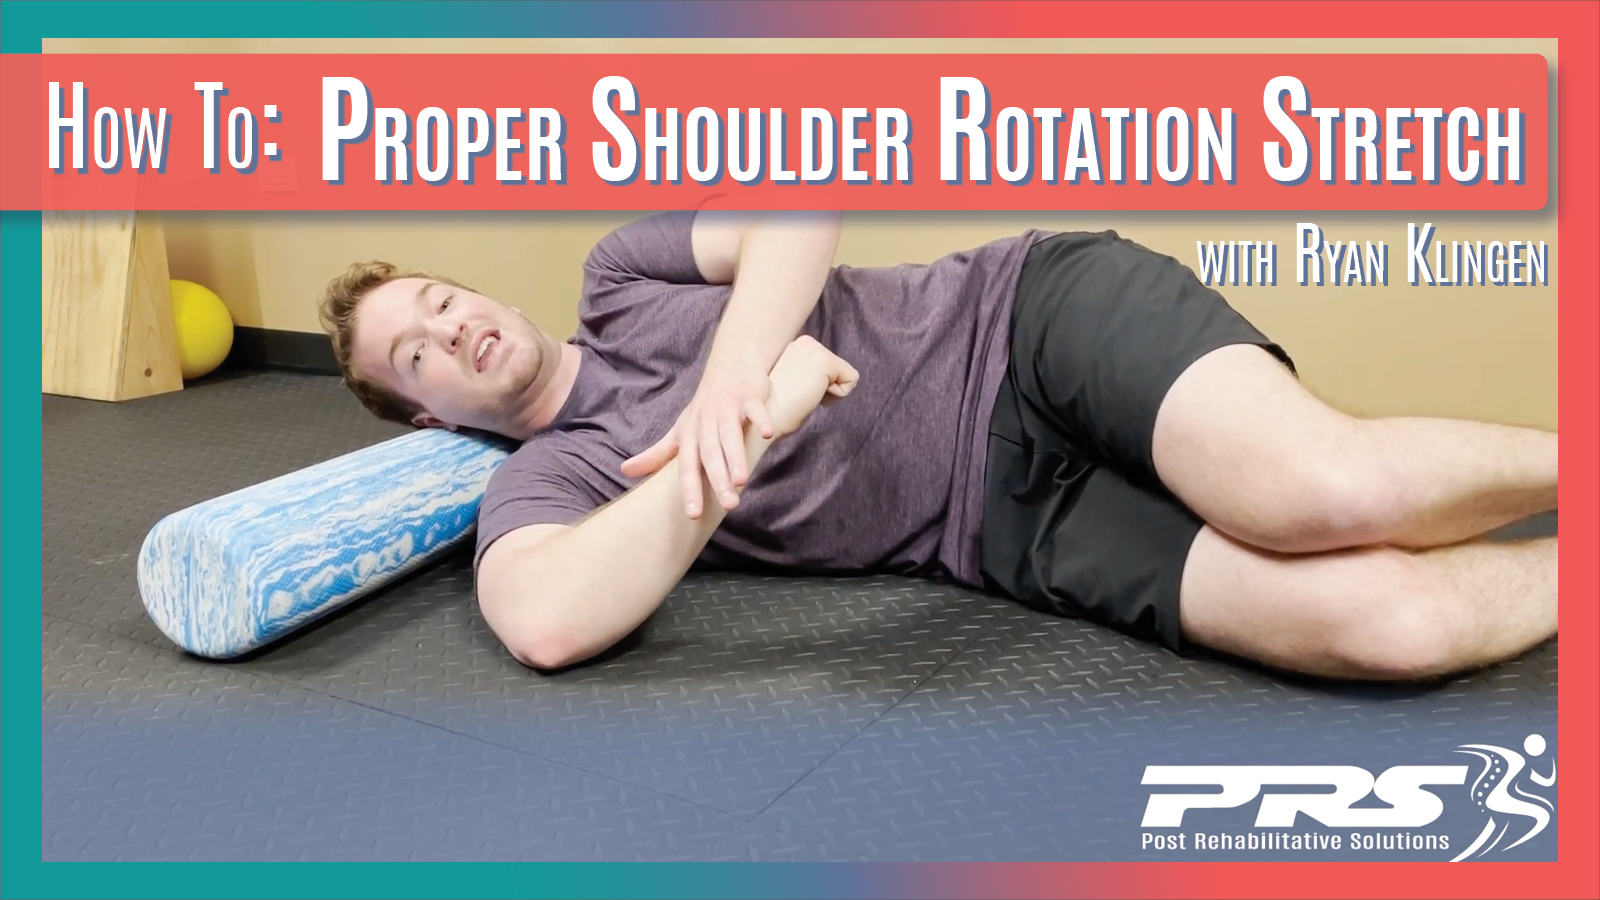 How to: Proper Shoulder Rotation Stretch